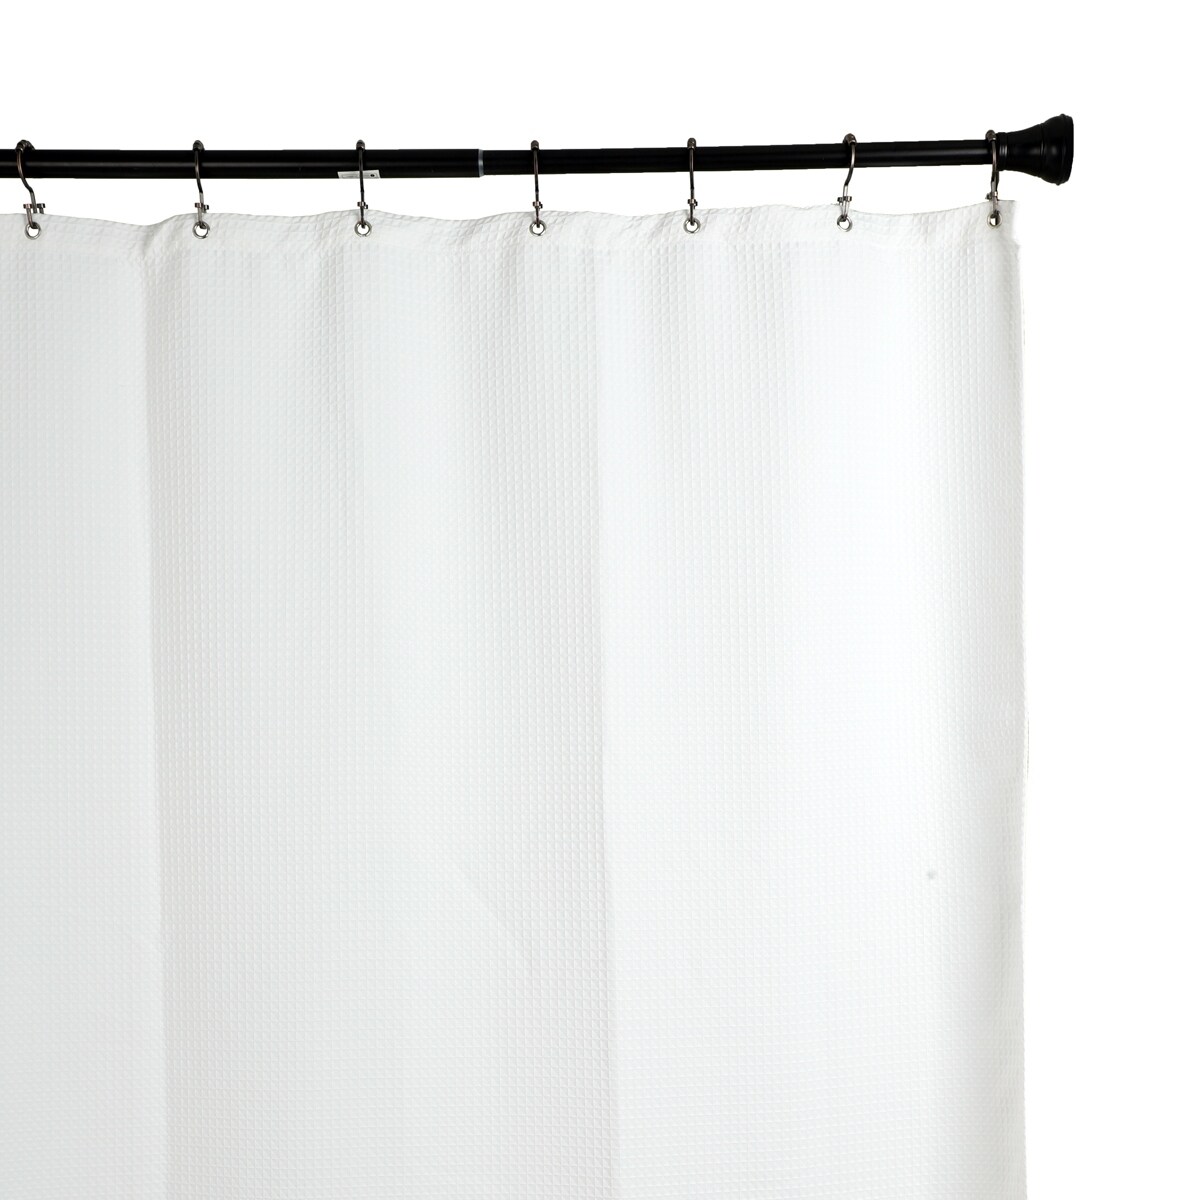 12PCS C-shaped Plastic Shower Curtain Hook, Clear And White Shower Curtain  Hooks, Rustproof Shower Rings For Curtain, Flexible Shower Hooks For Bathro